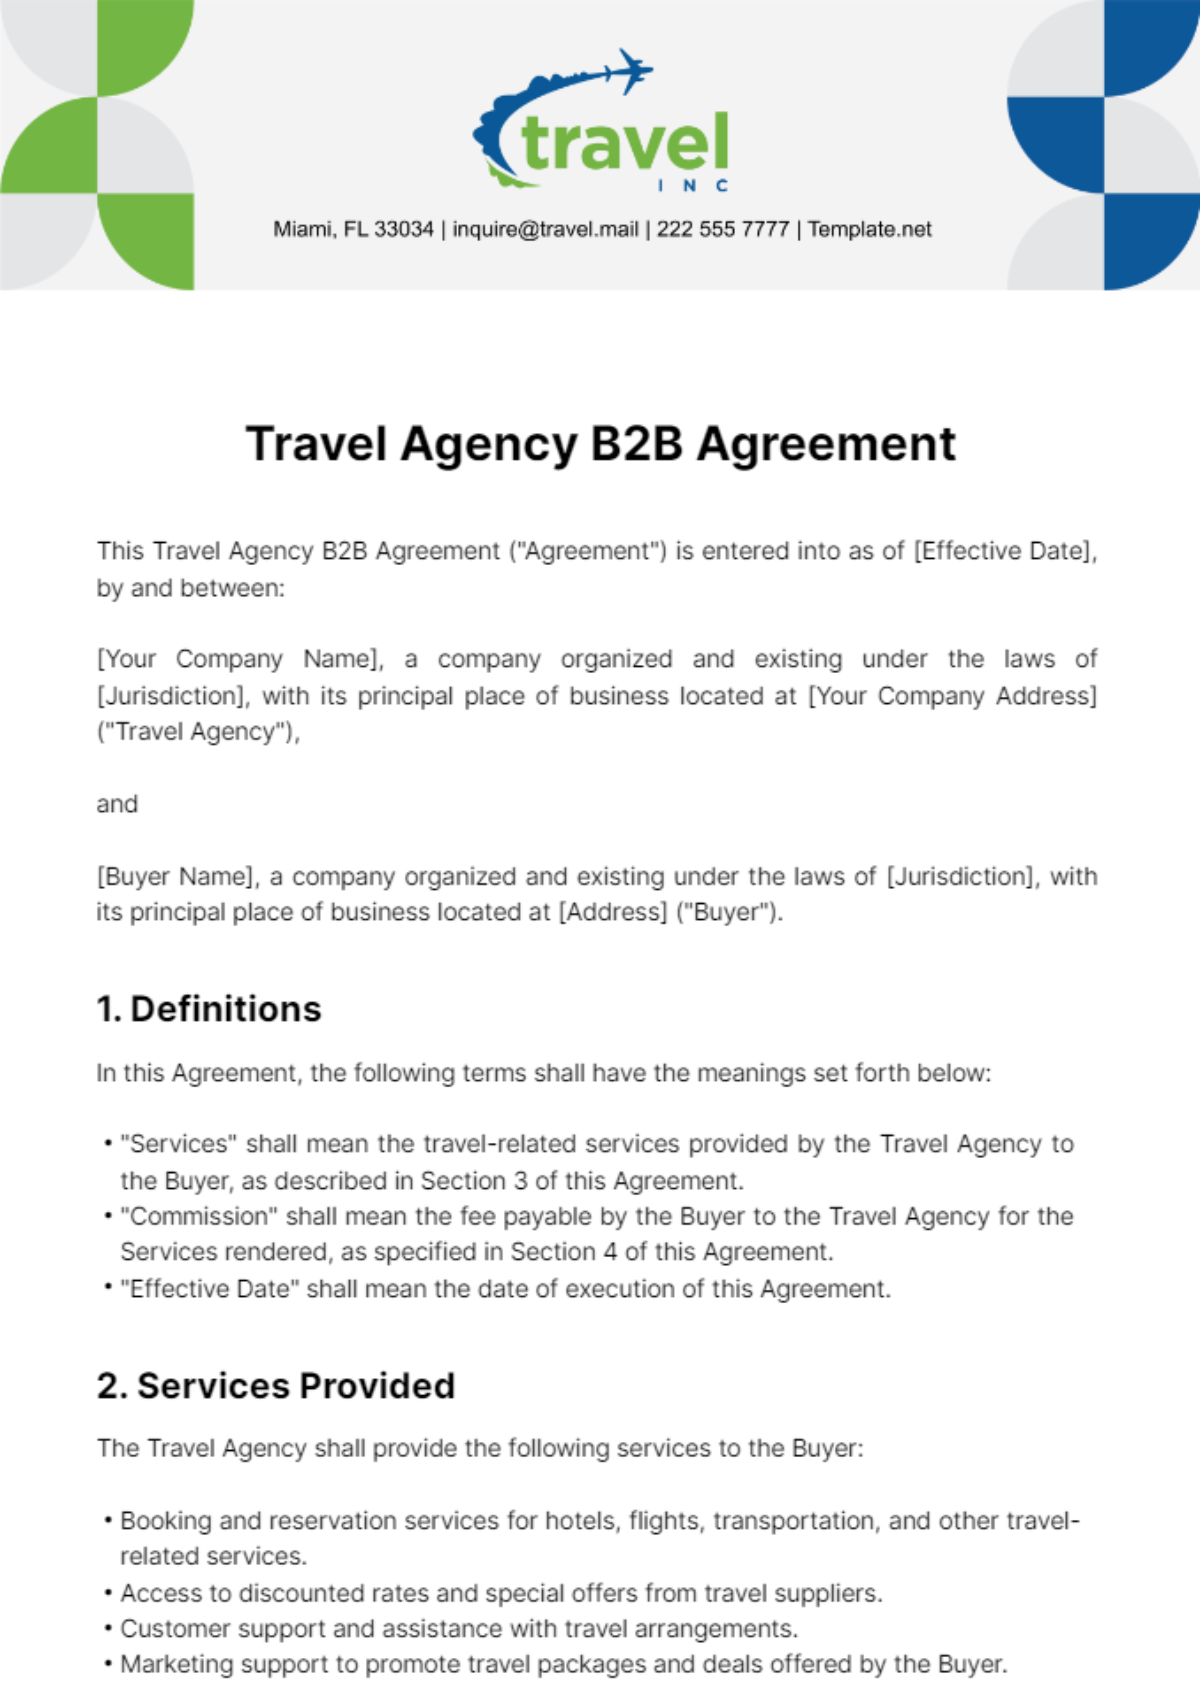 Travel Agency B2B Agreement Template